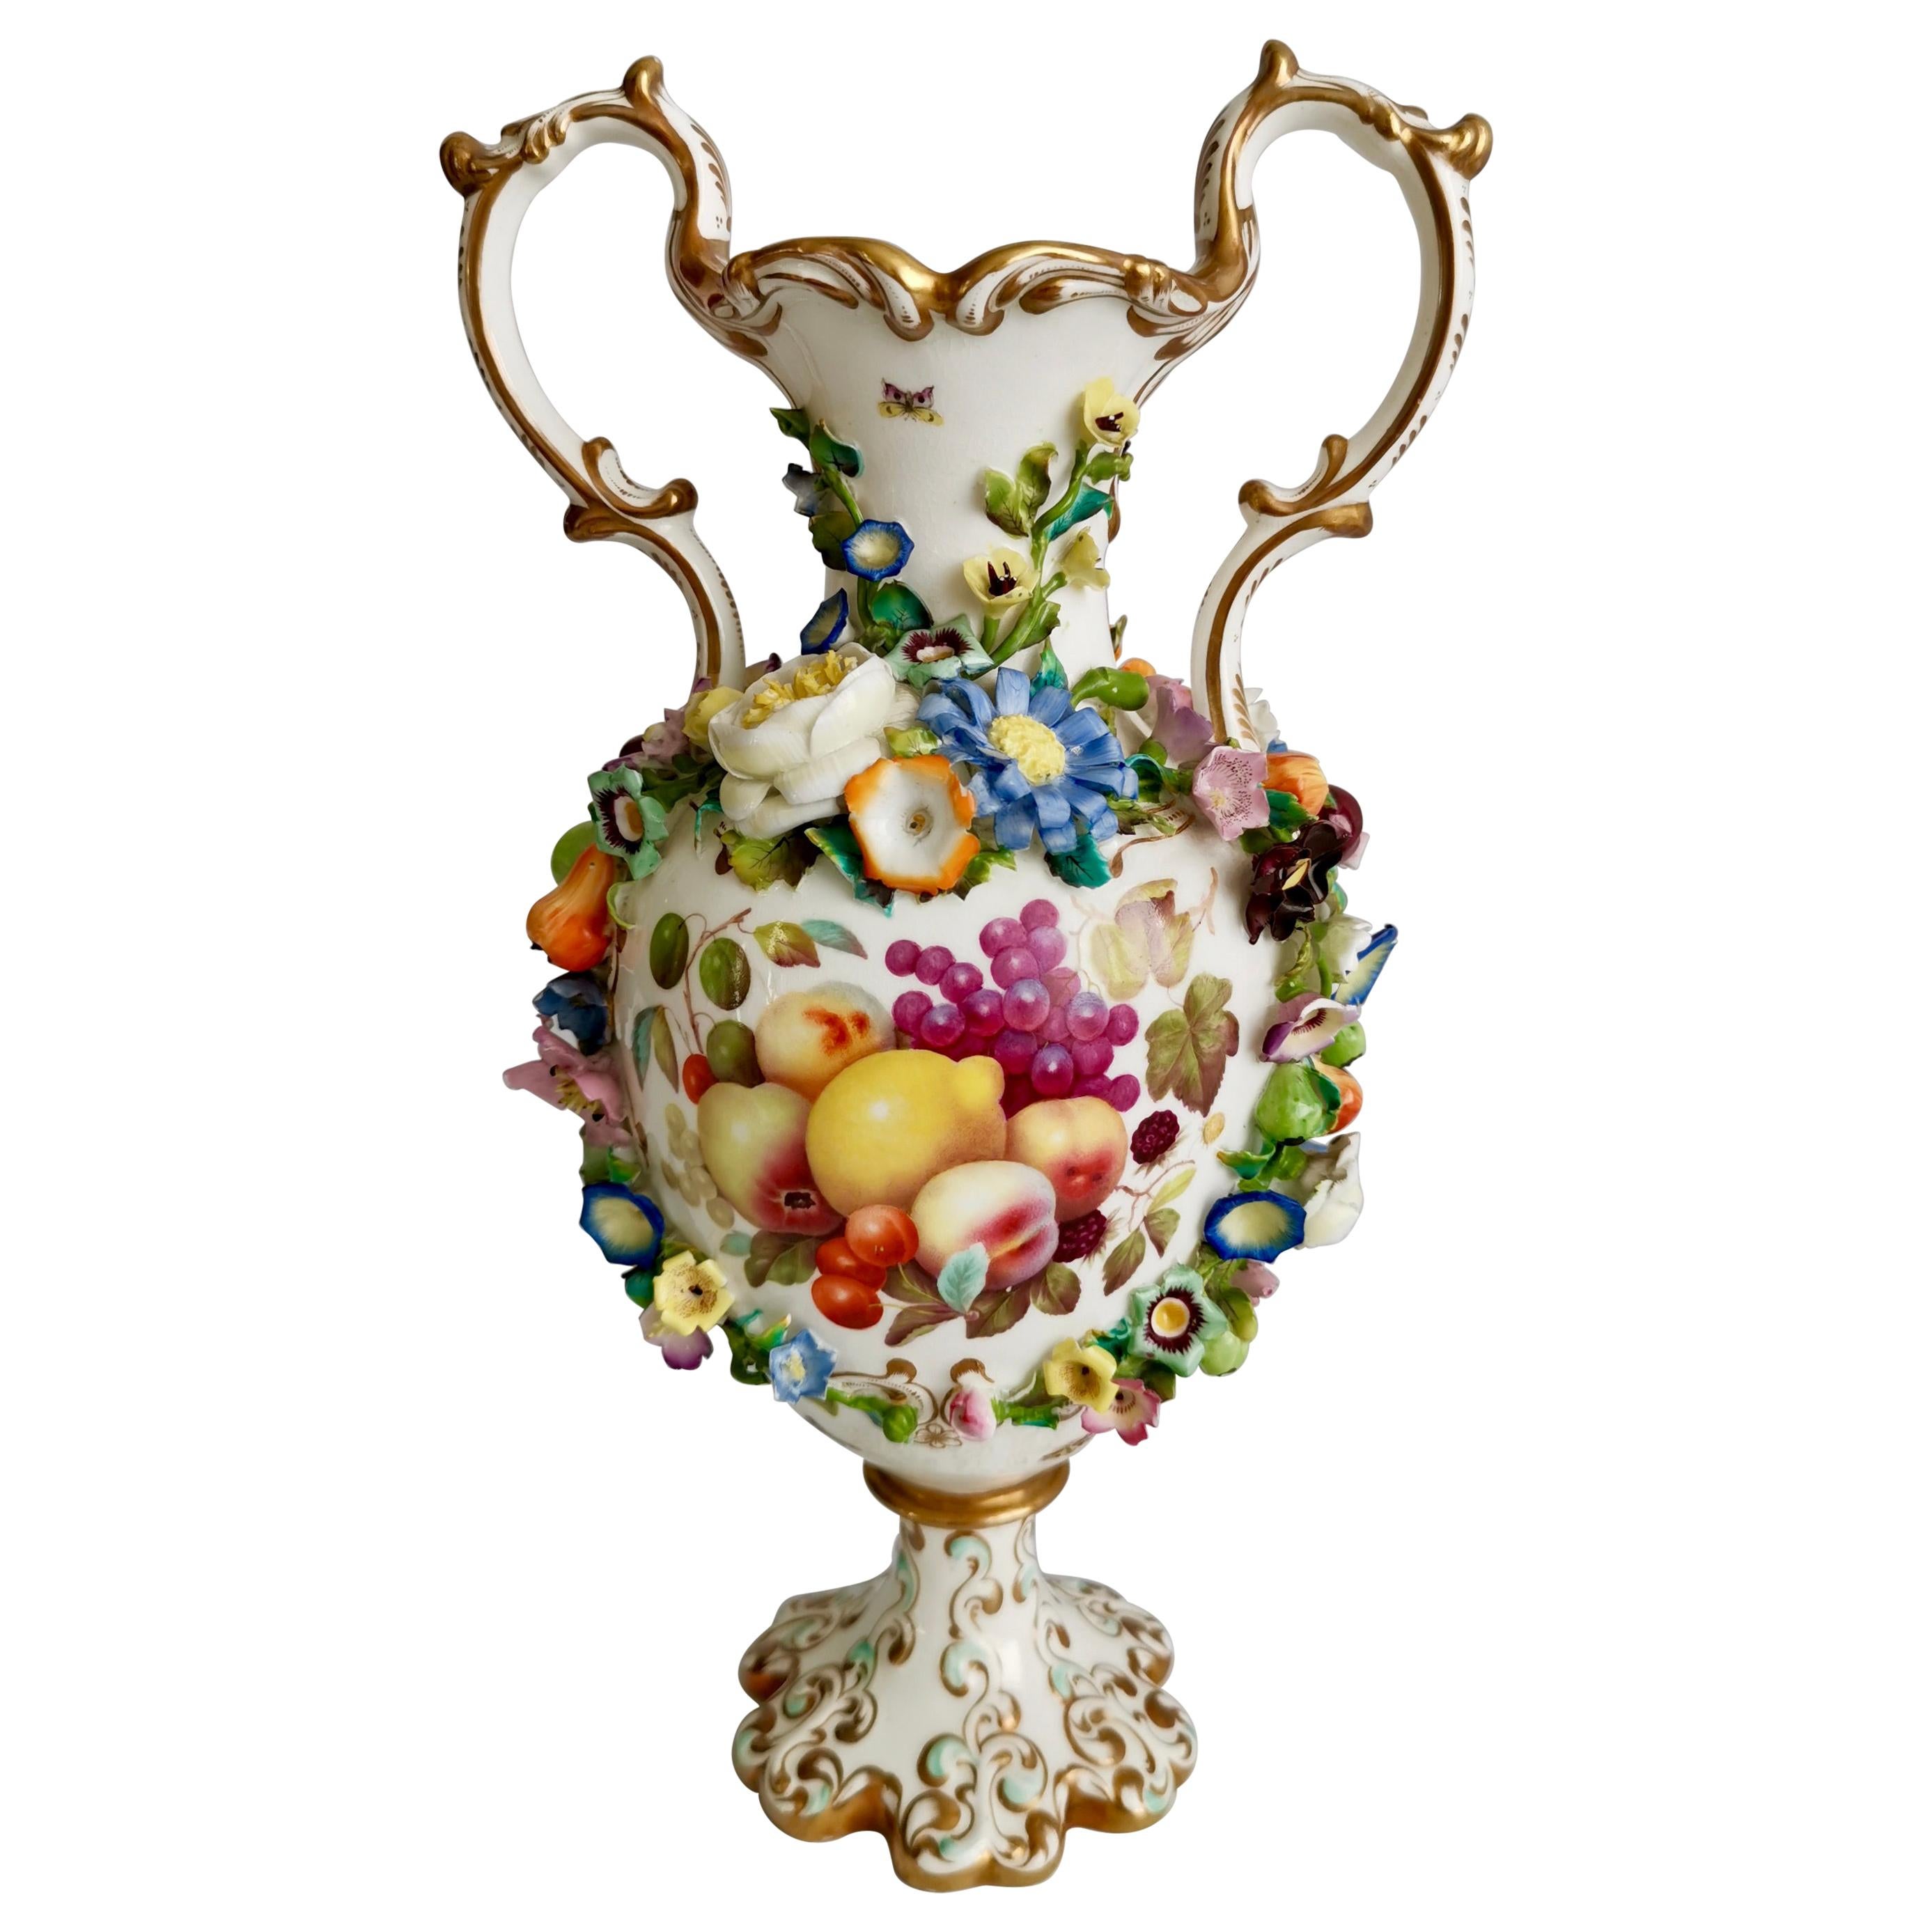 Minton Porcelain Encrusted Vase, Fruits by Thomas Steel, Rococo Revival, ca 1835